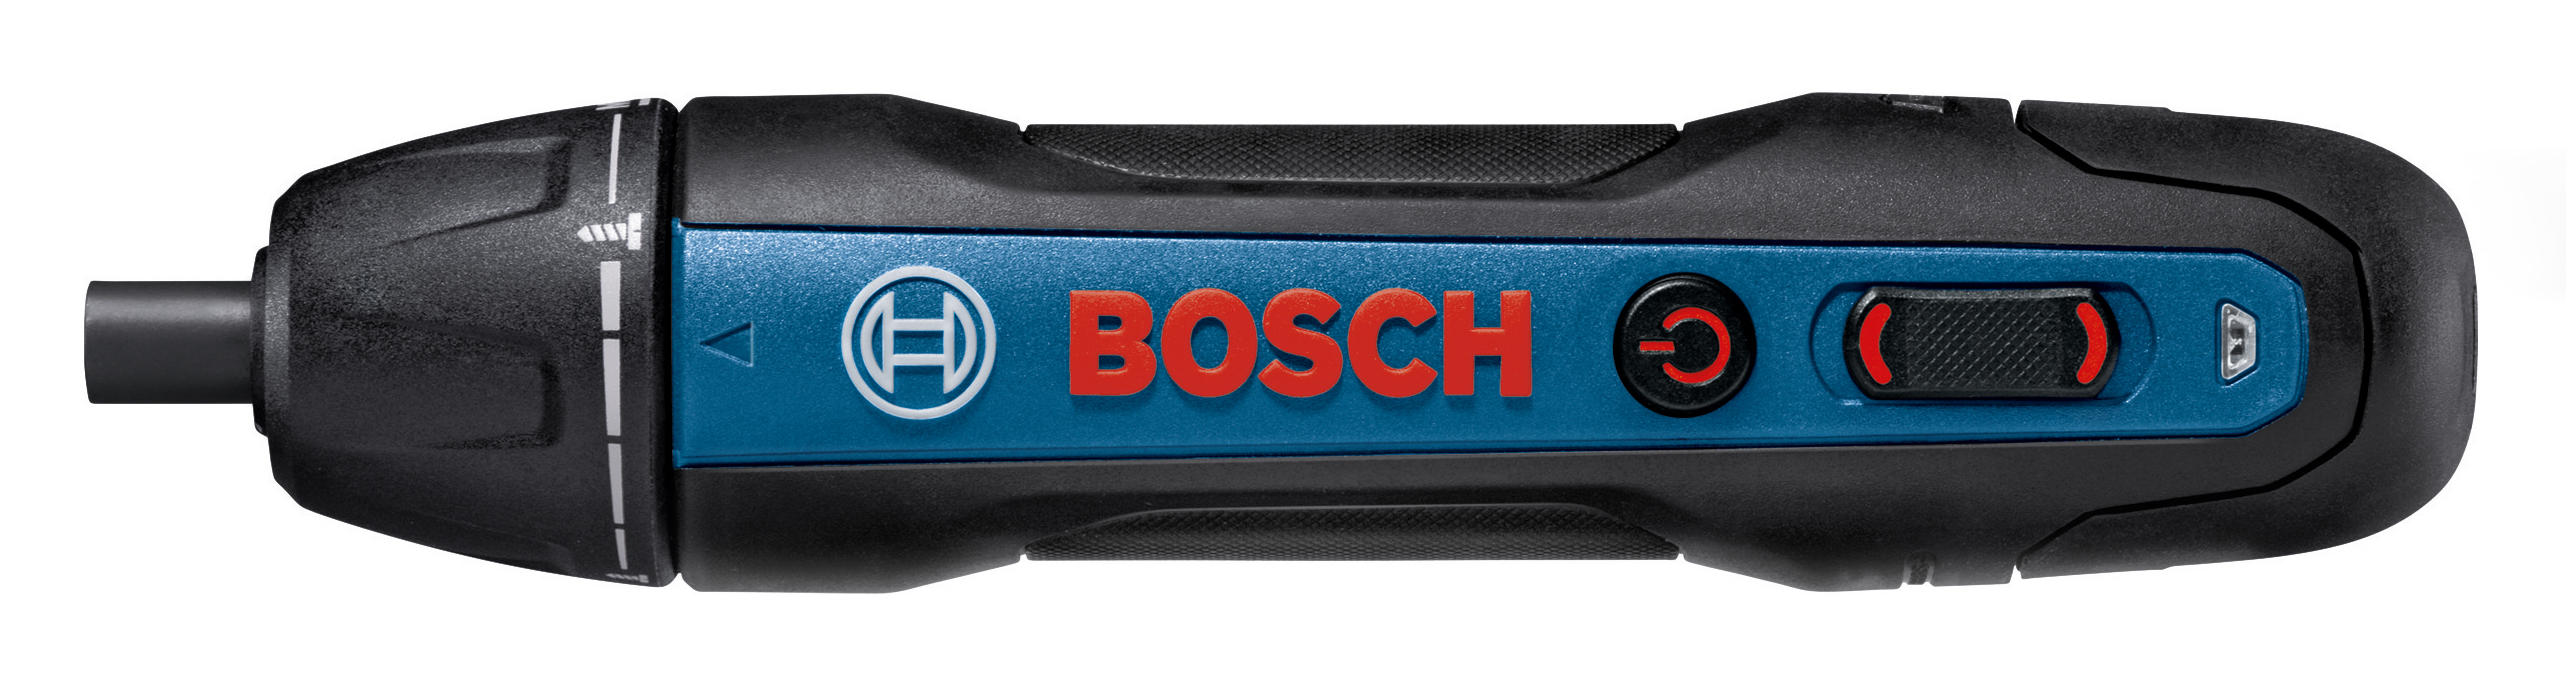 iF Design - Bosch GO (Second Generation)